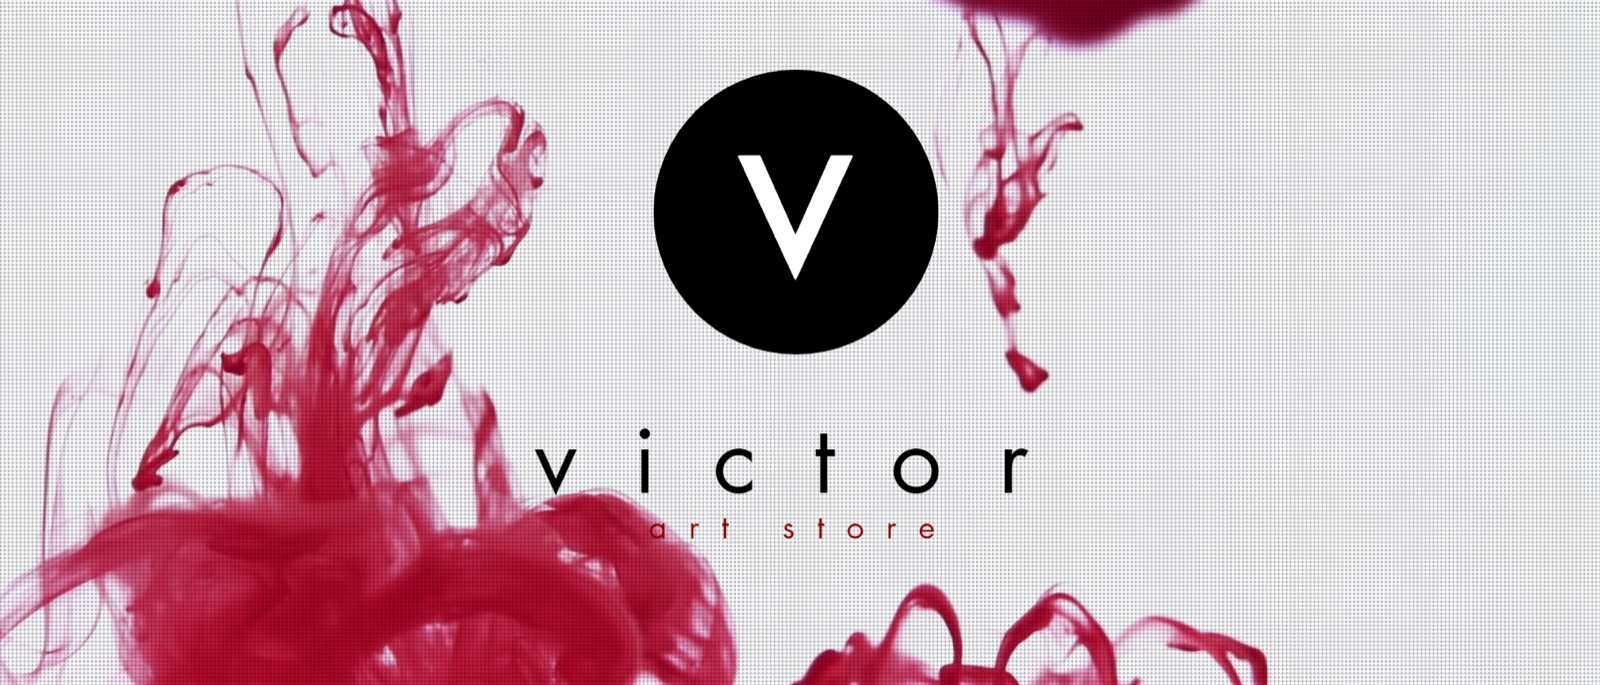 Victor-art-store